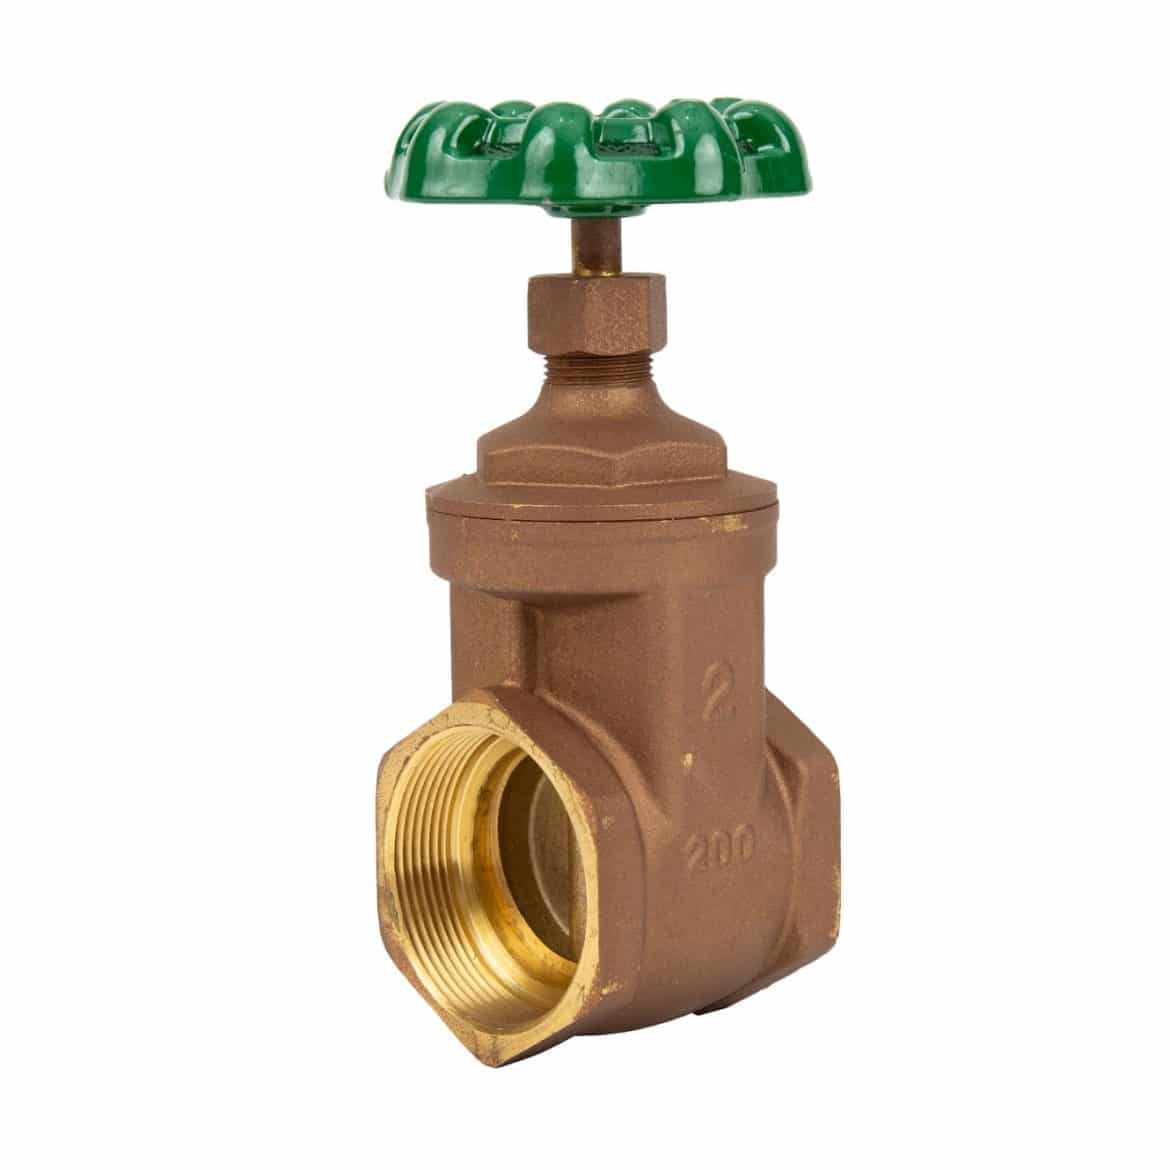 Types of plumbing valves